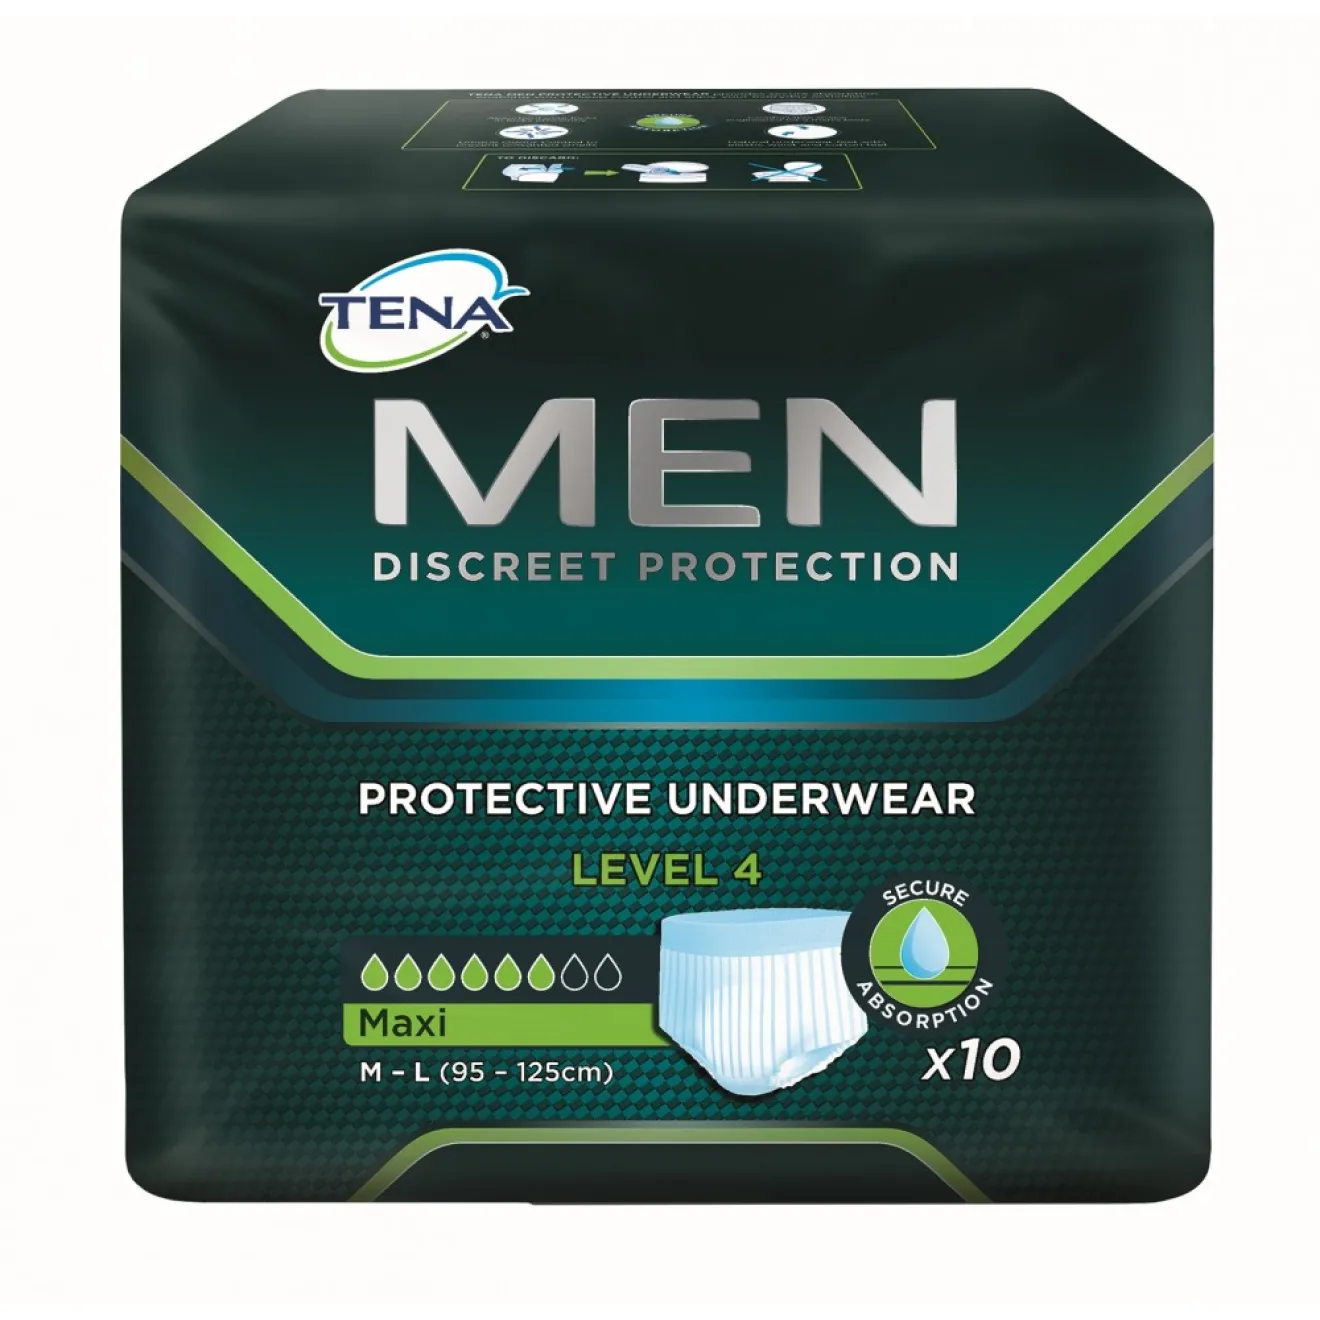 TENA MEN Protective Underwear Level 4 M/L 8x10 ST